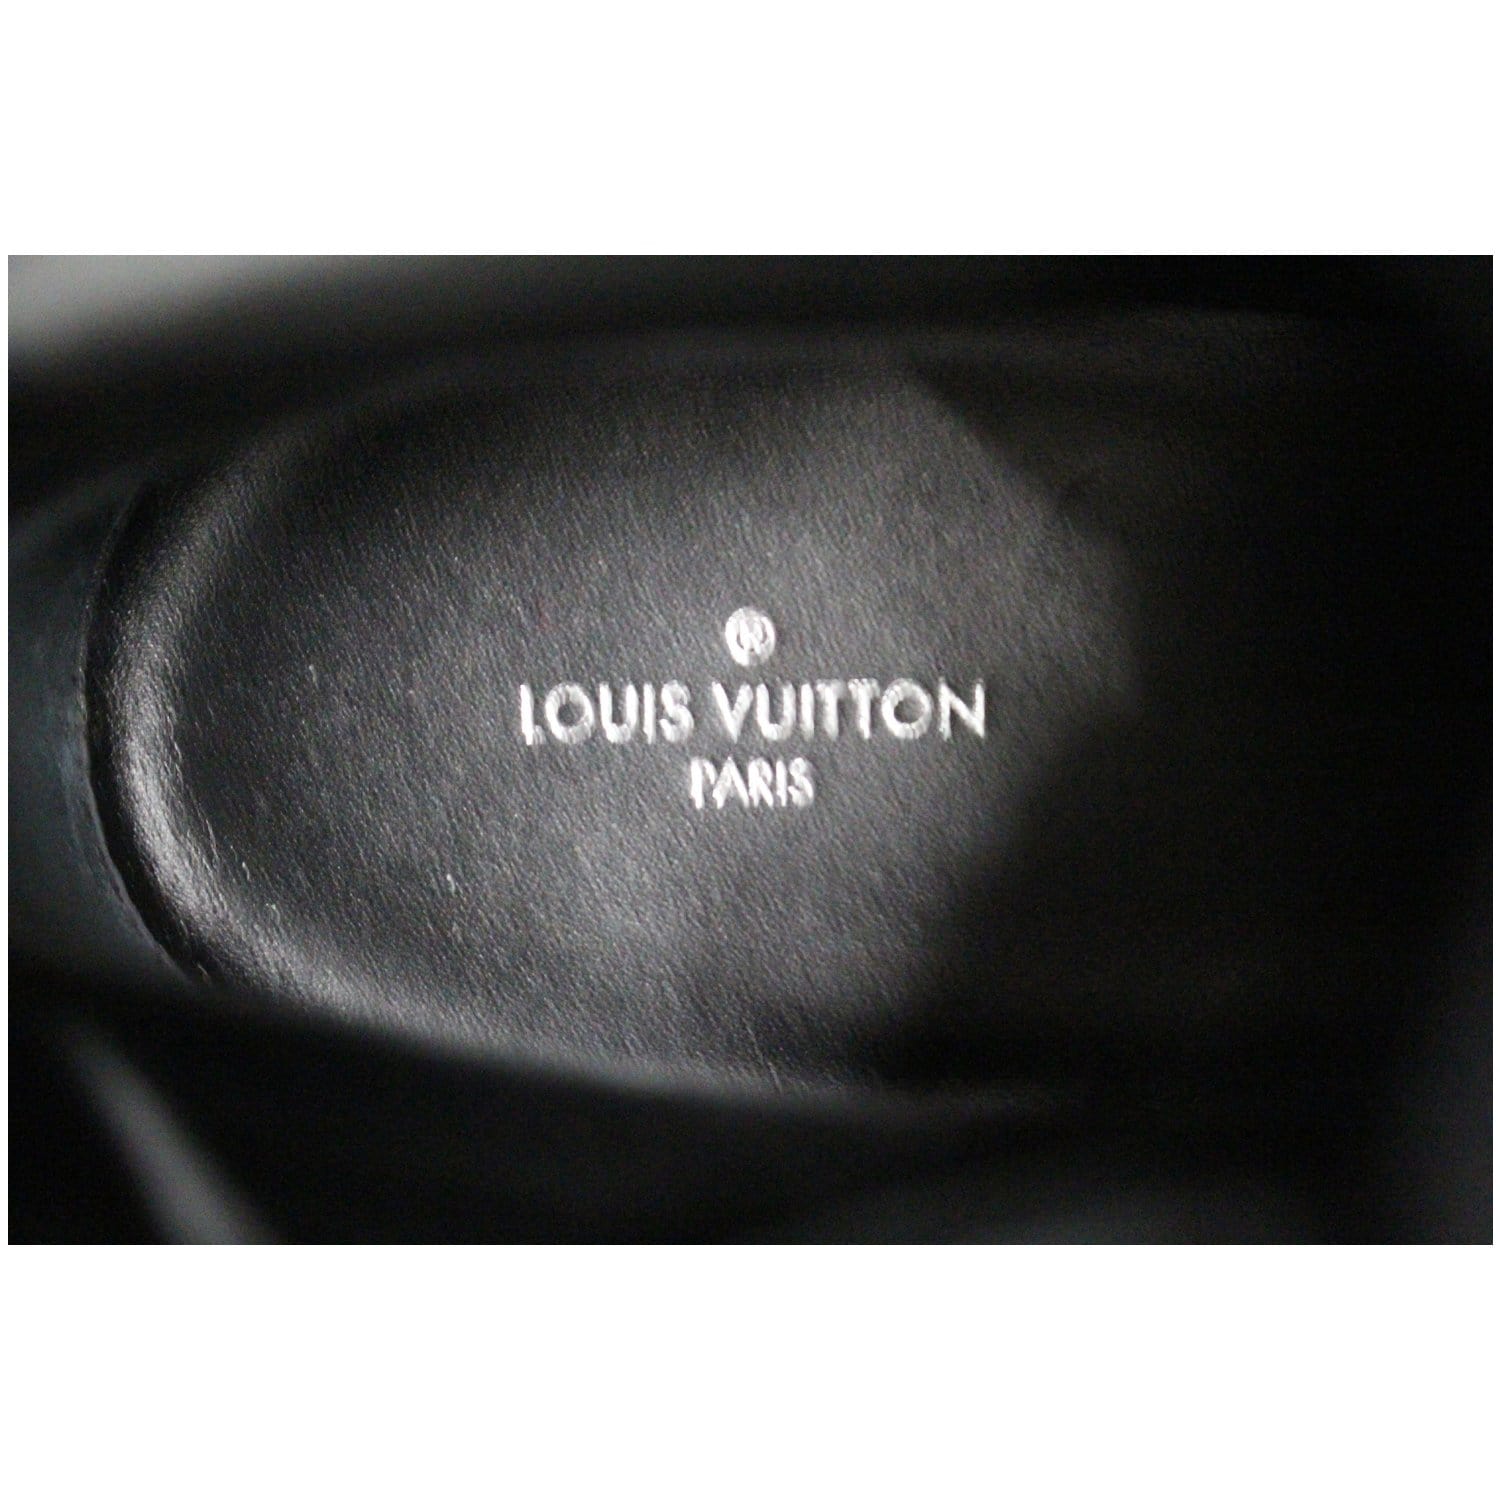 Louis Vuitton Jacquard Since 1854 Metropolis Flat Ranger Boots Sz 37 NIB